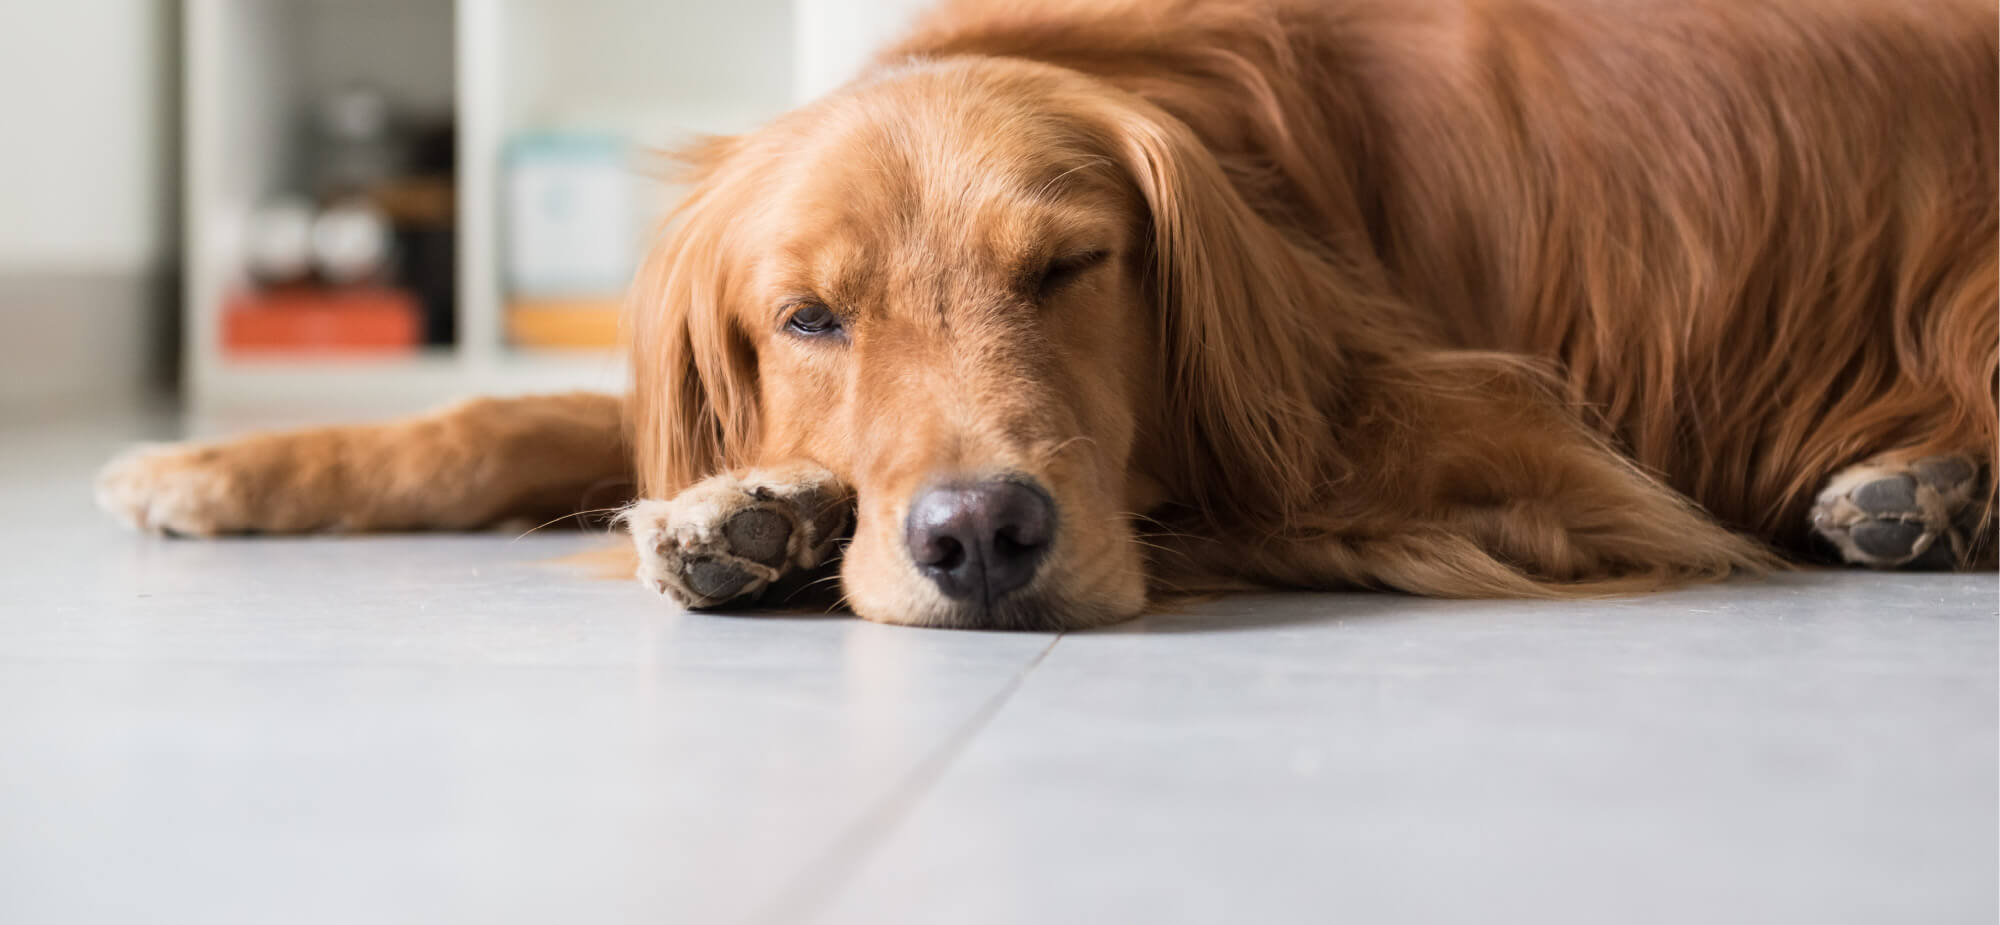 A dog enjoying tiled heated flooring